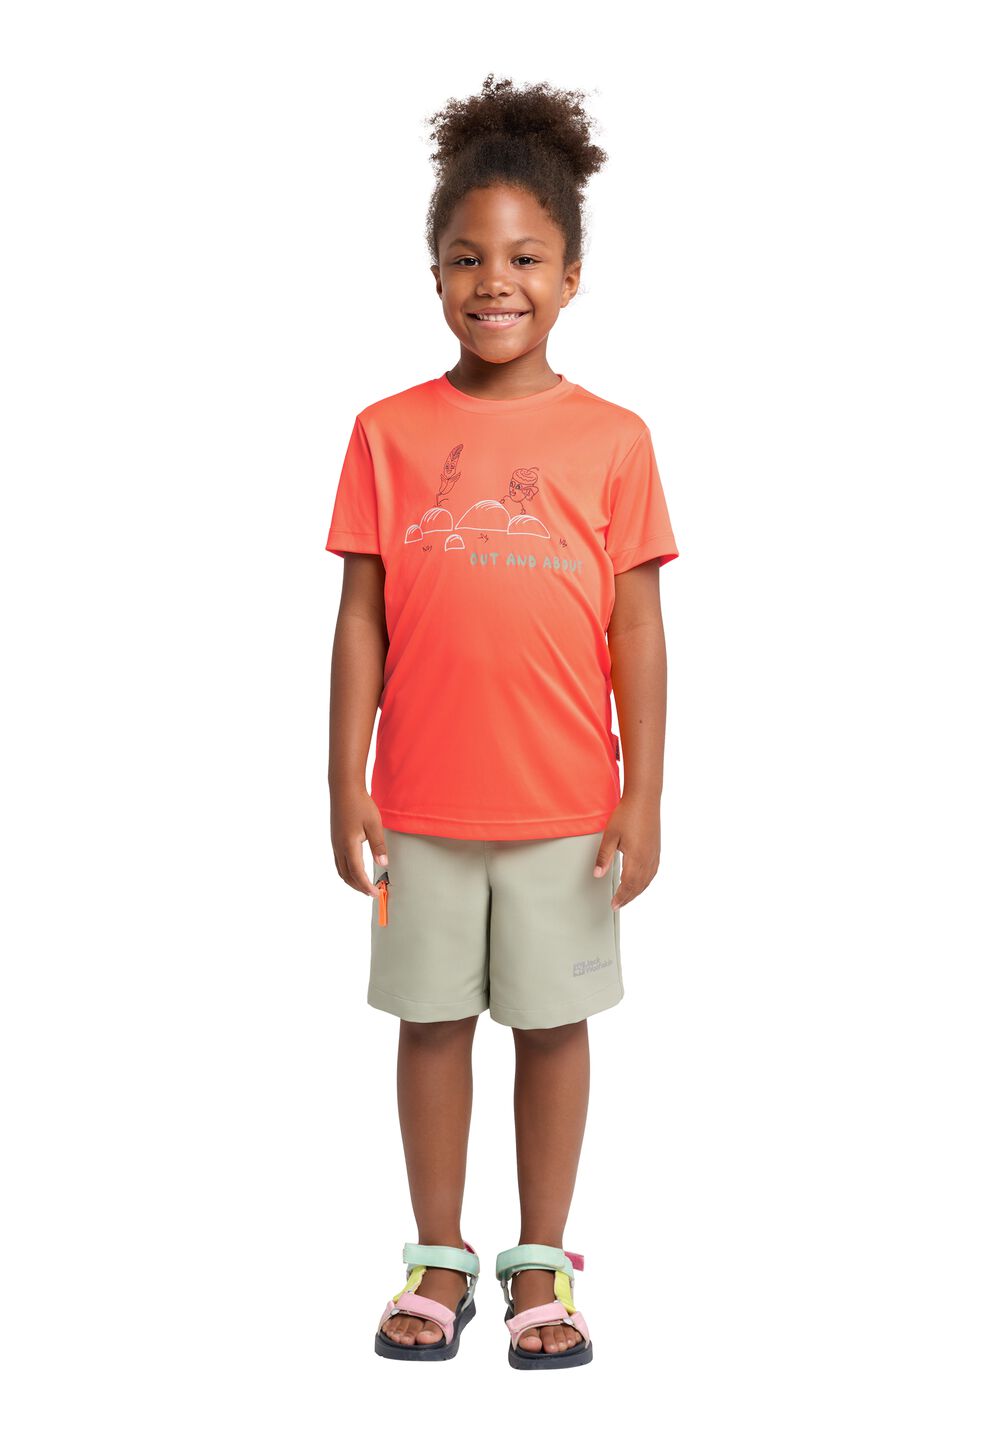 Jack Wolfskin OUT AND About T-Shirt Kids Functioneel shirt Kinderen 140 rood digital orange